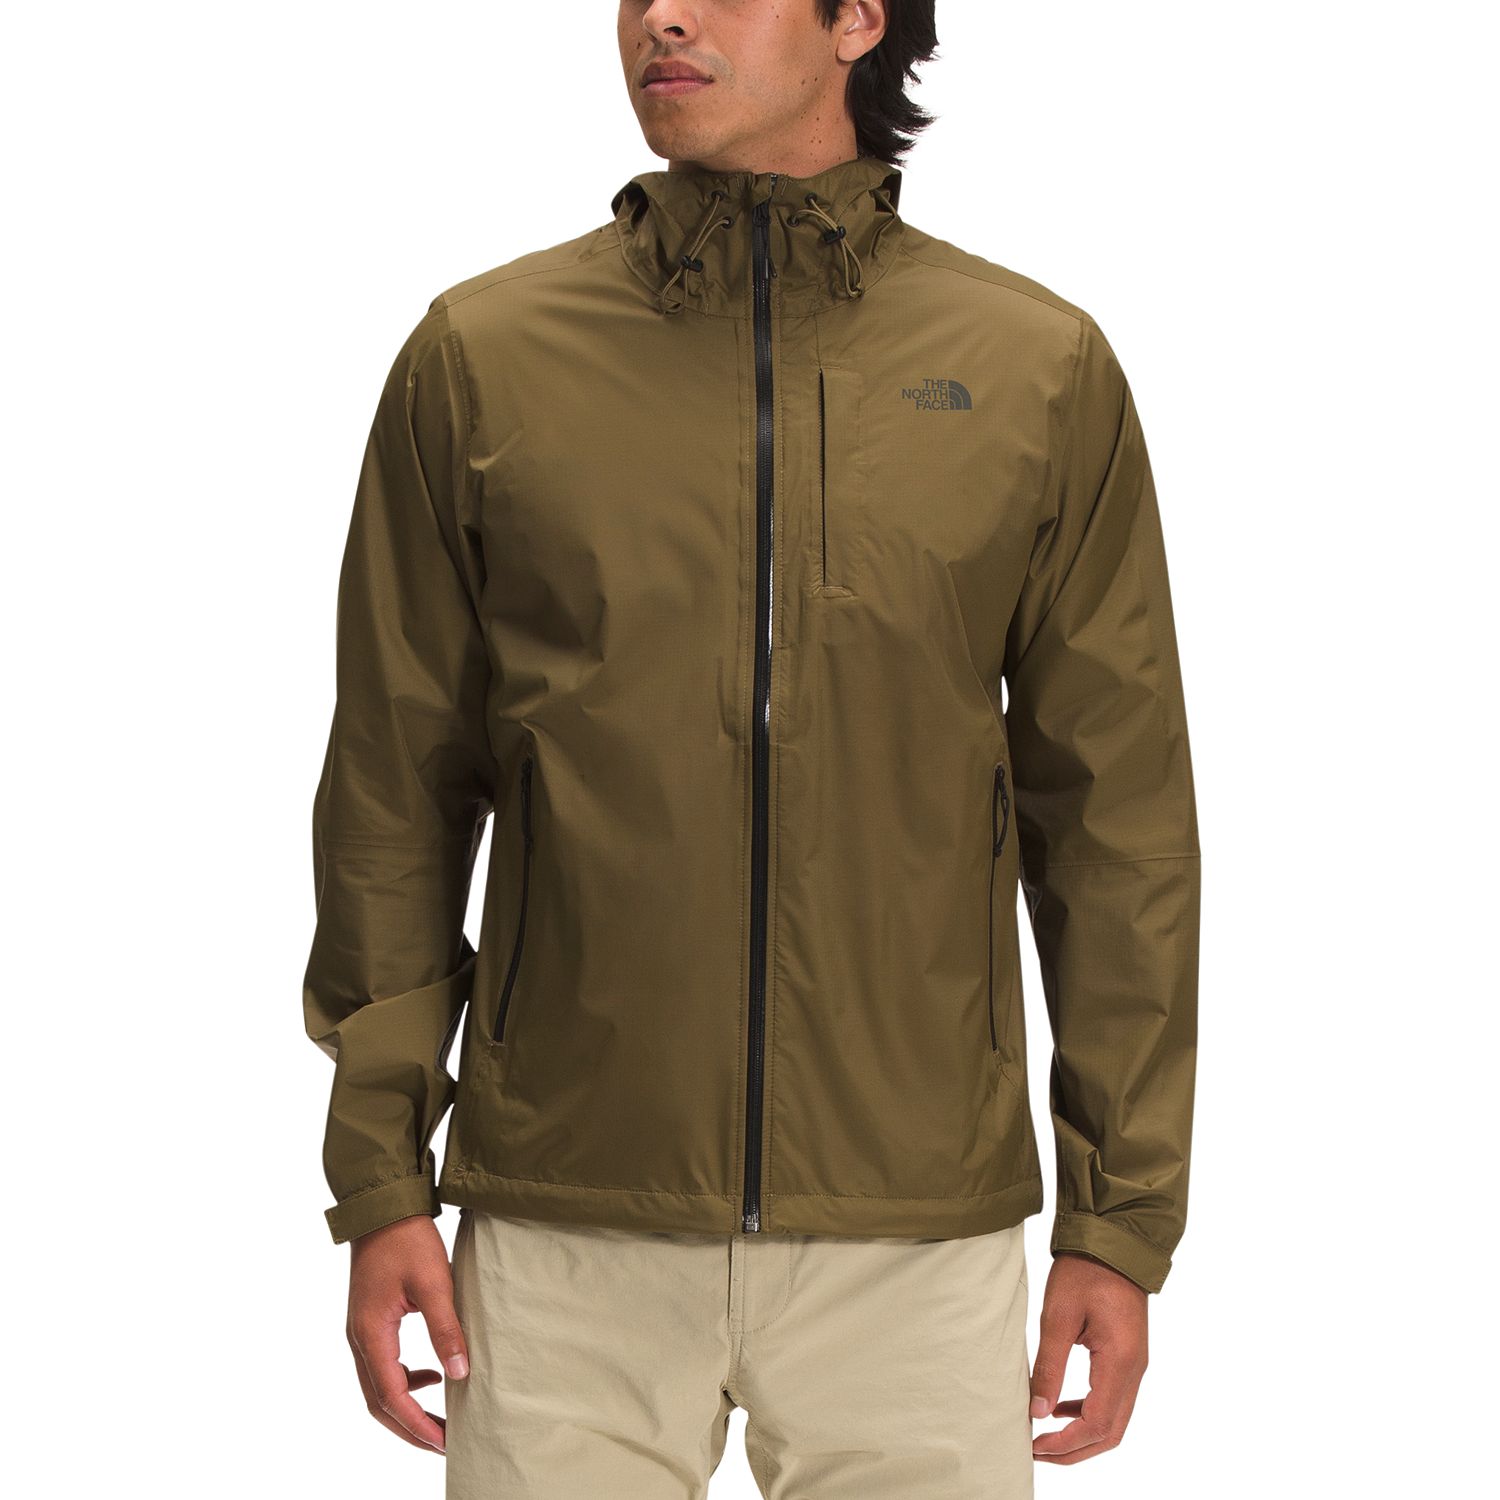 THE NORTH FACE Men’s Alta Vista Jacket - Olive - $51.60 - FS @macy's